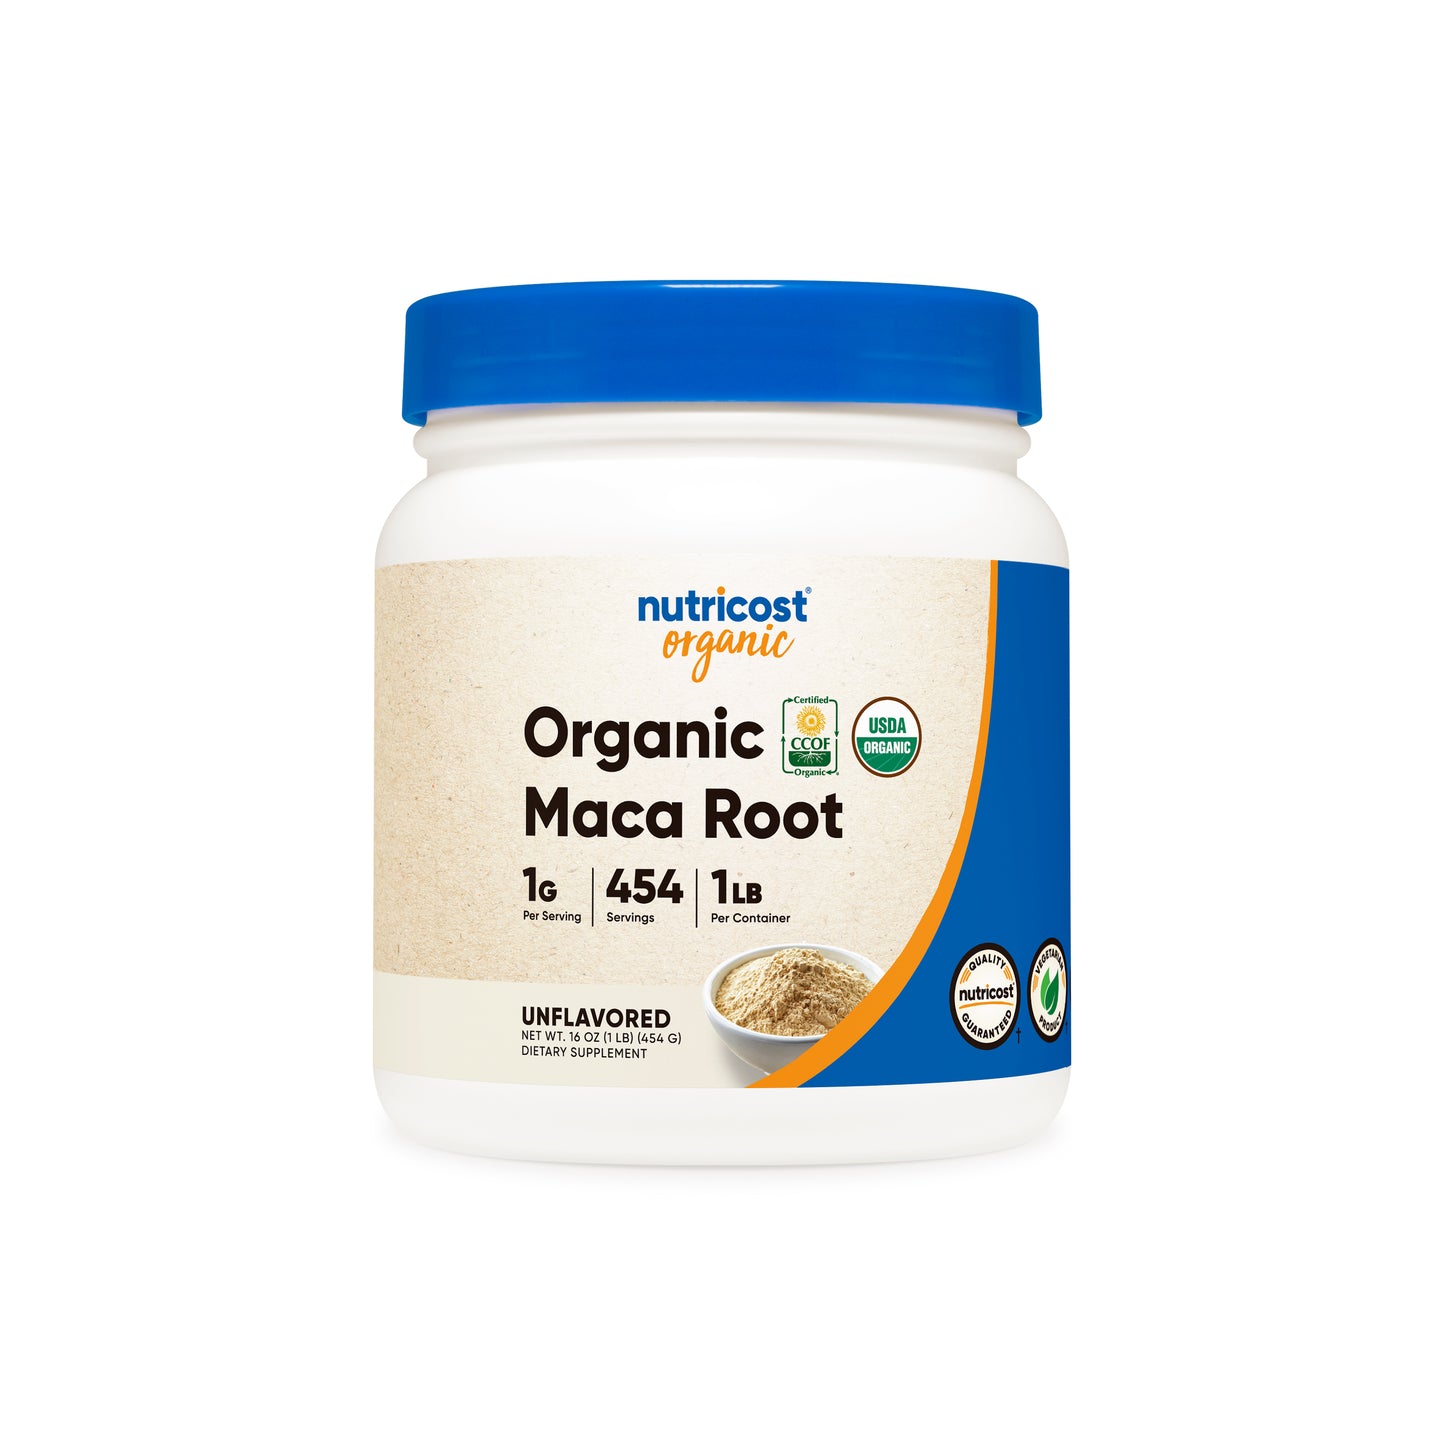 Nutricost Organic Maca Root Powder